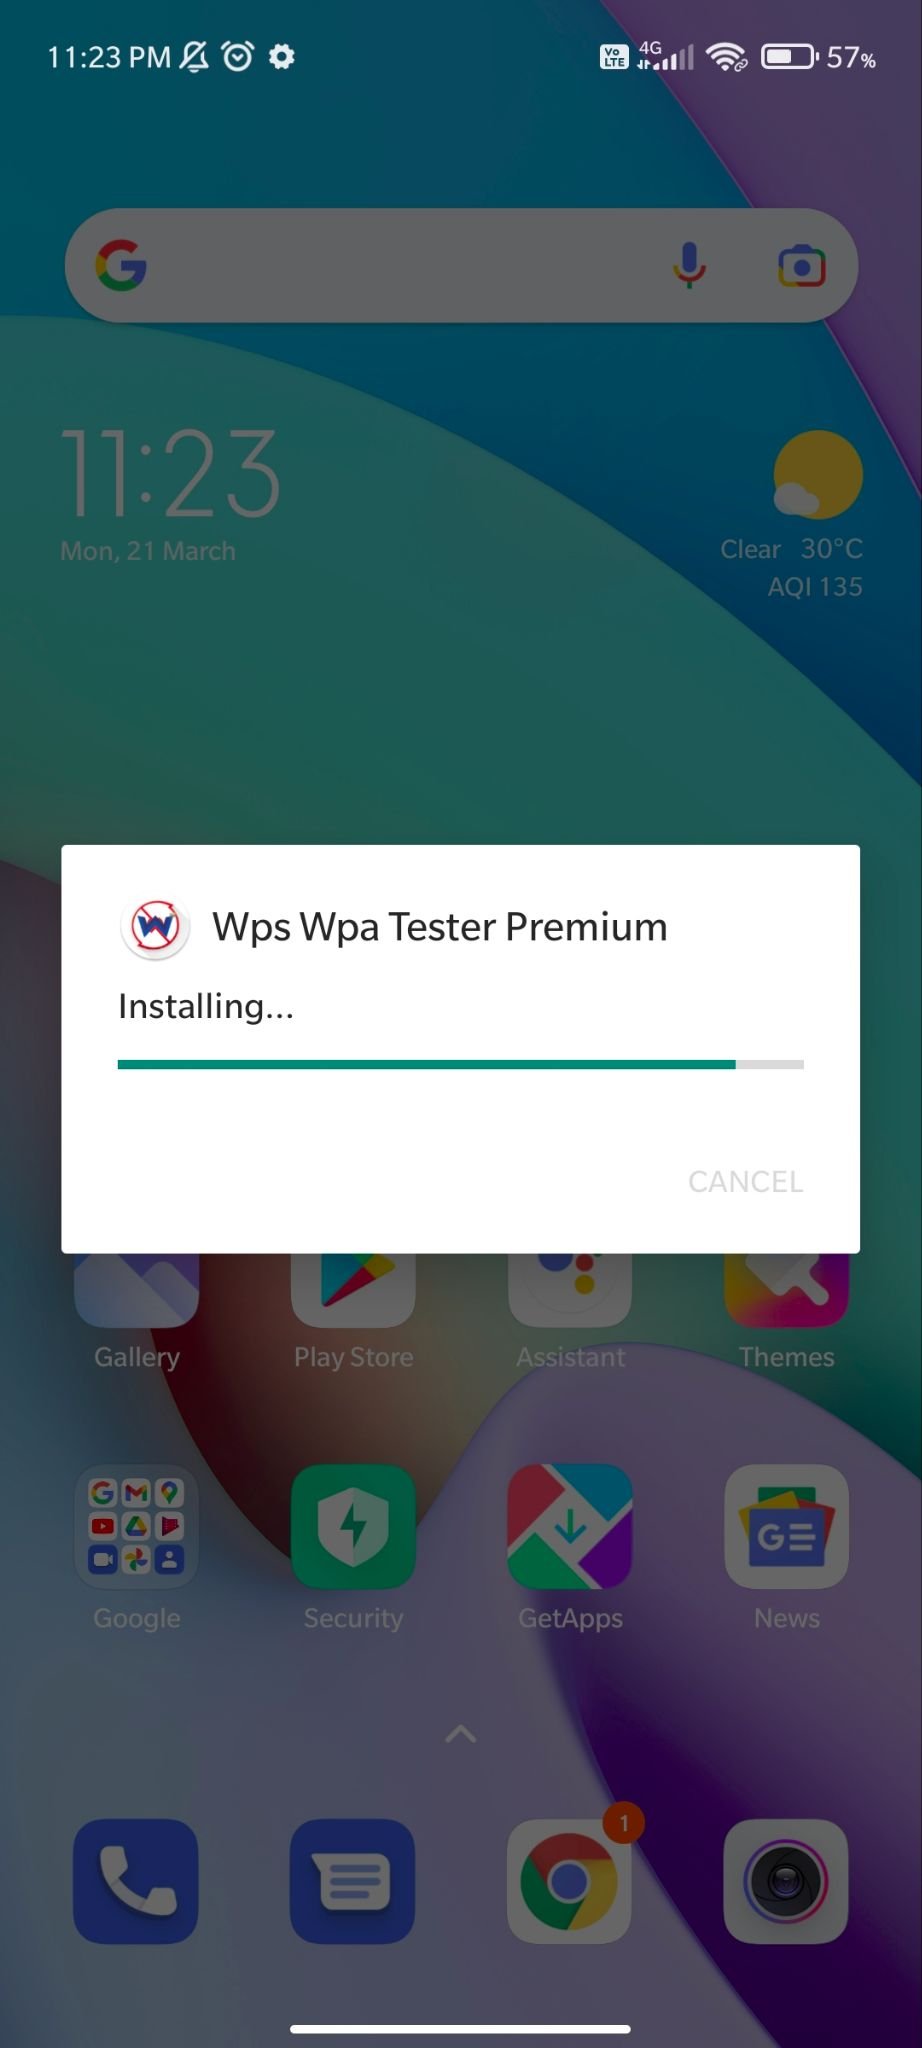 wps wpa tester apk installed